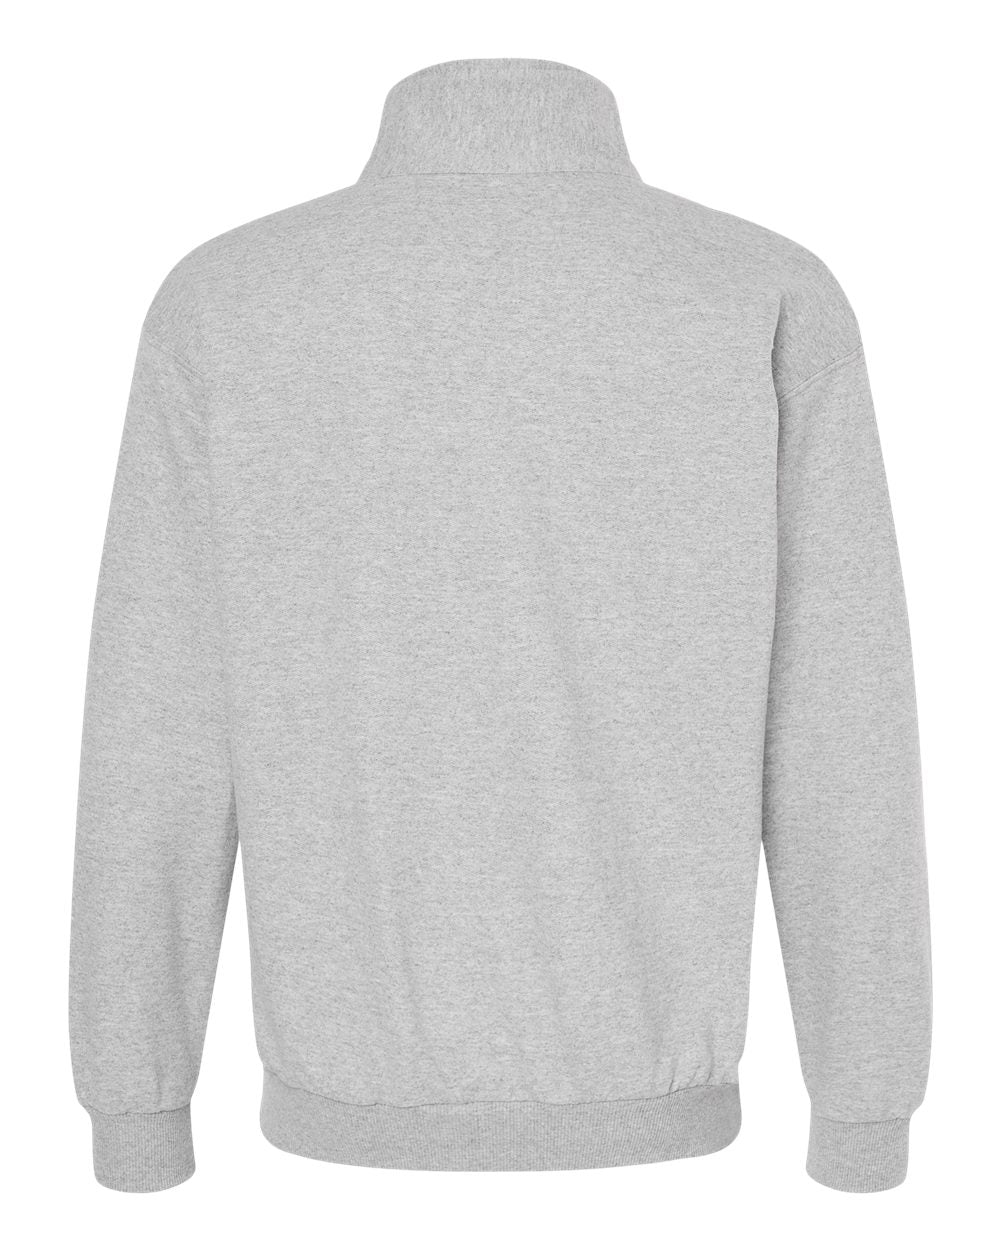 King Fashion Full-Zip Sweatshirt KF9016 #color_Athletic Grey